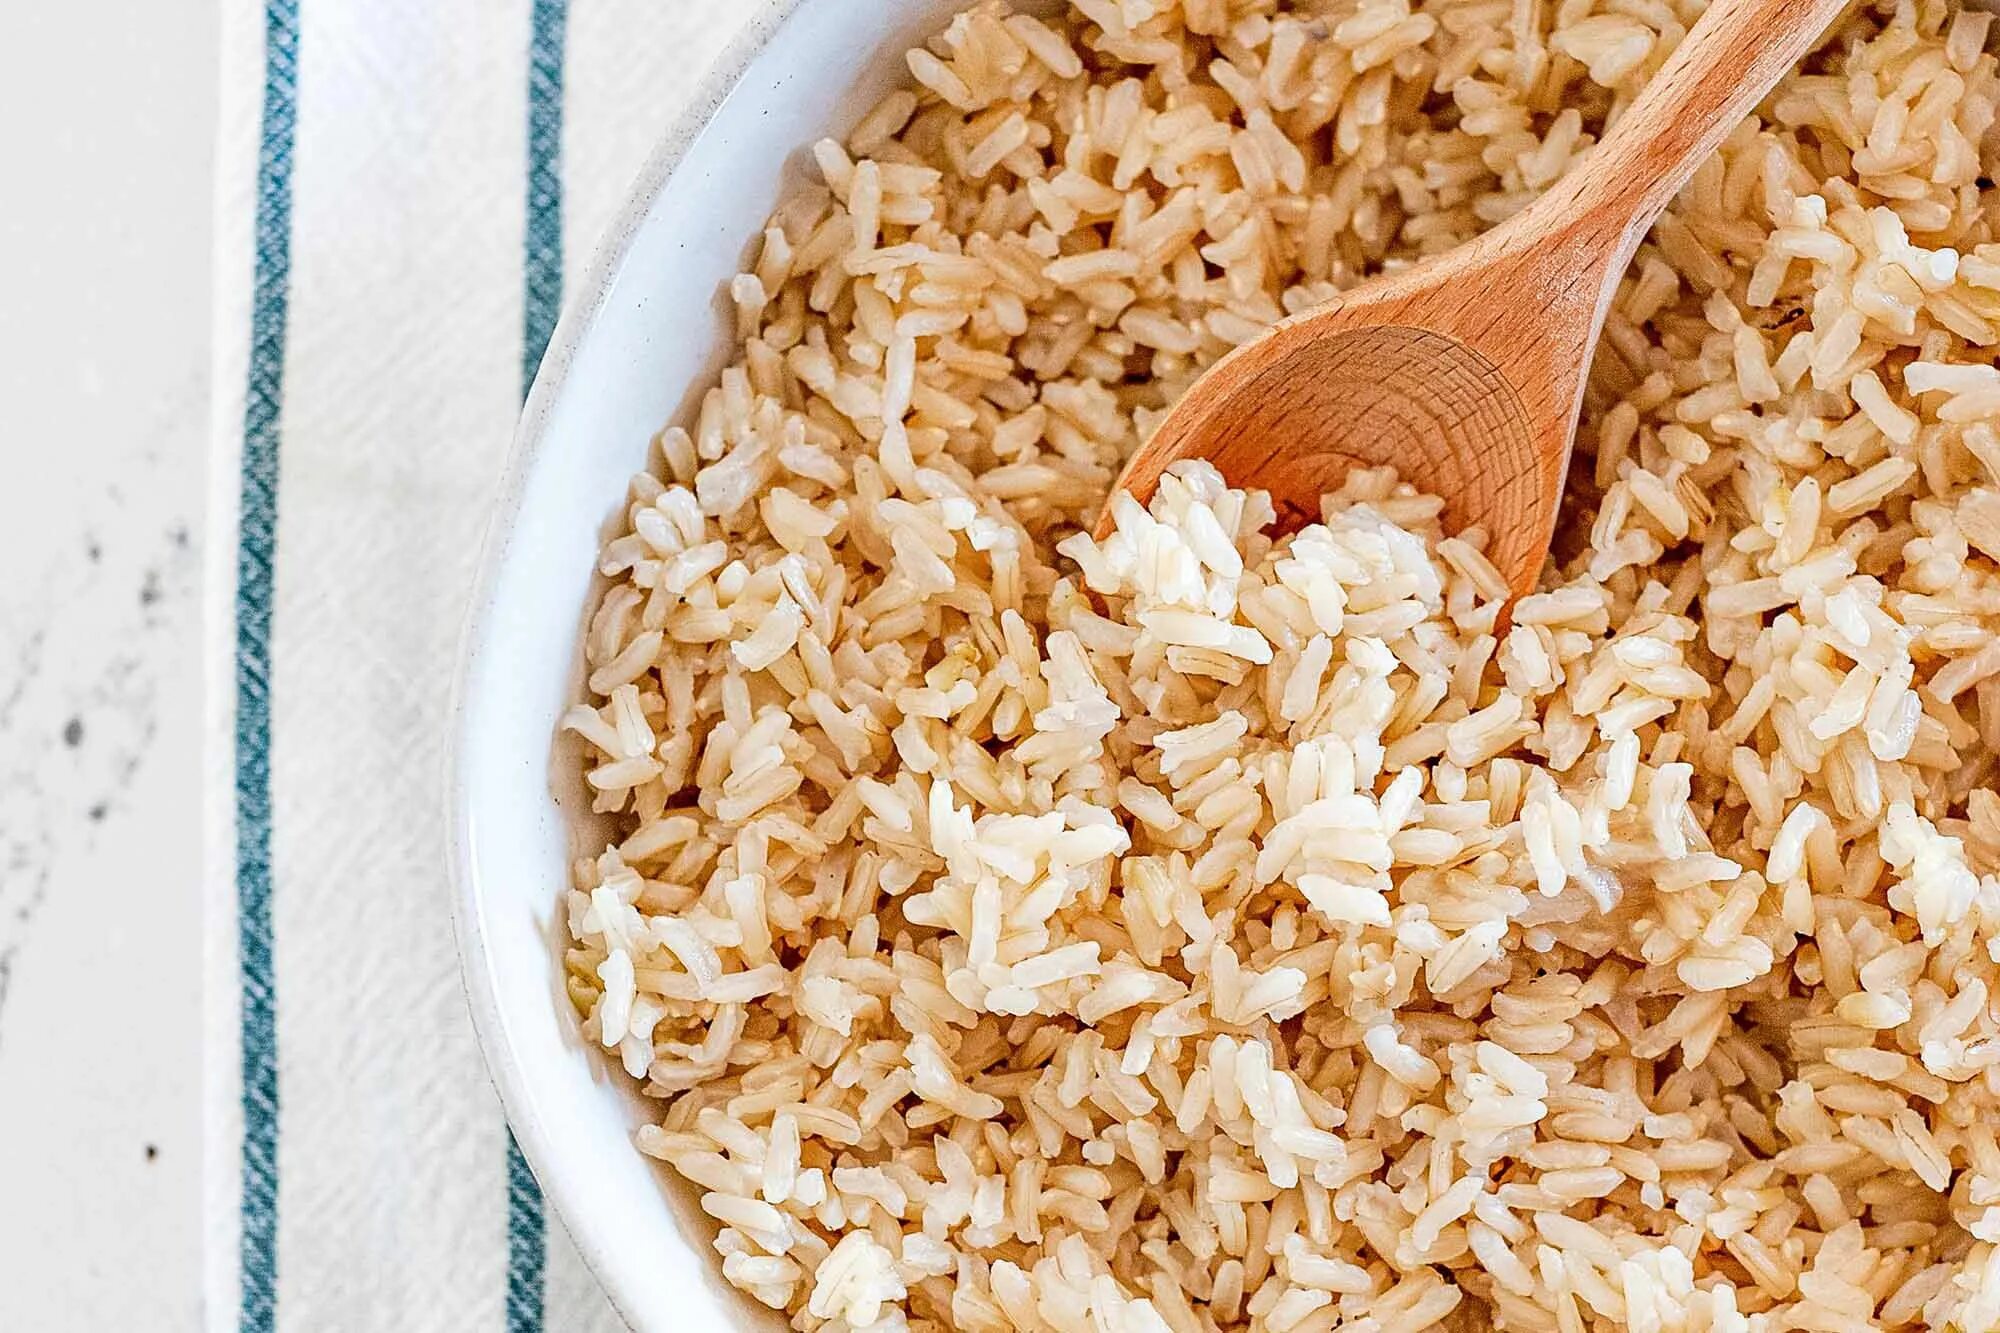 Brown rise. Рис бурый нешлифованный. Рис бурый нешелушеный. Бурый длиннозерновой рис. Цельнозерновой рис это бурый рис.